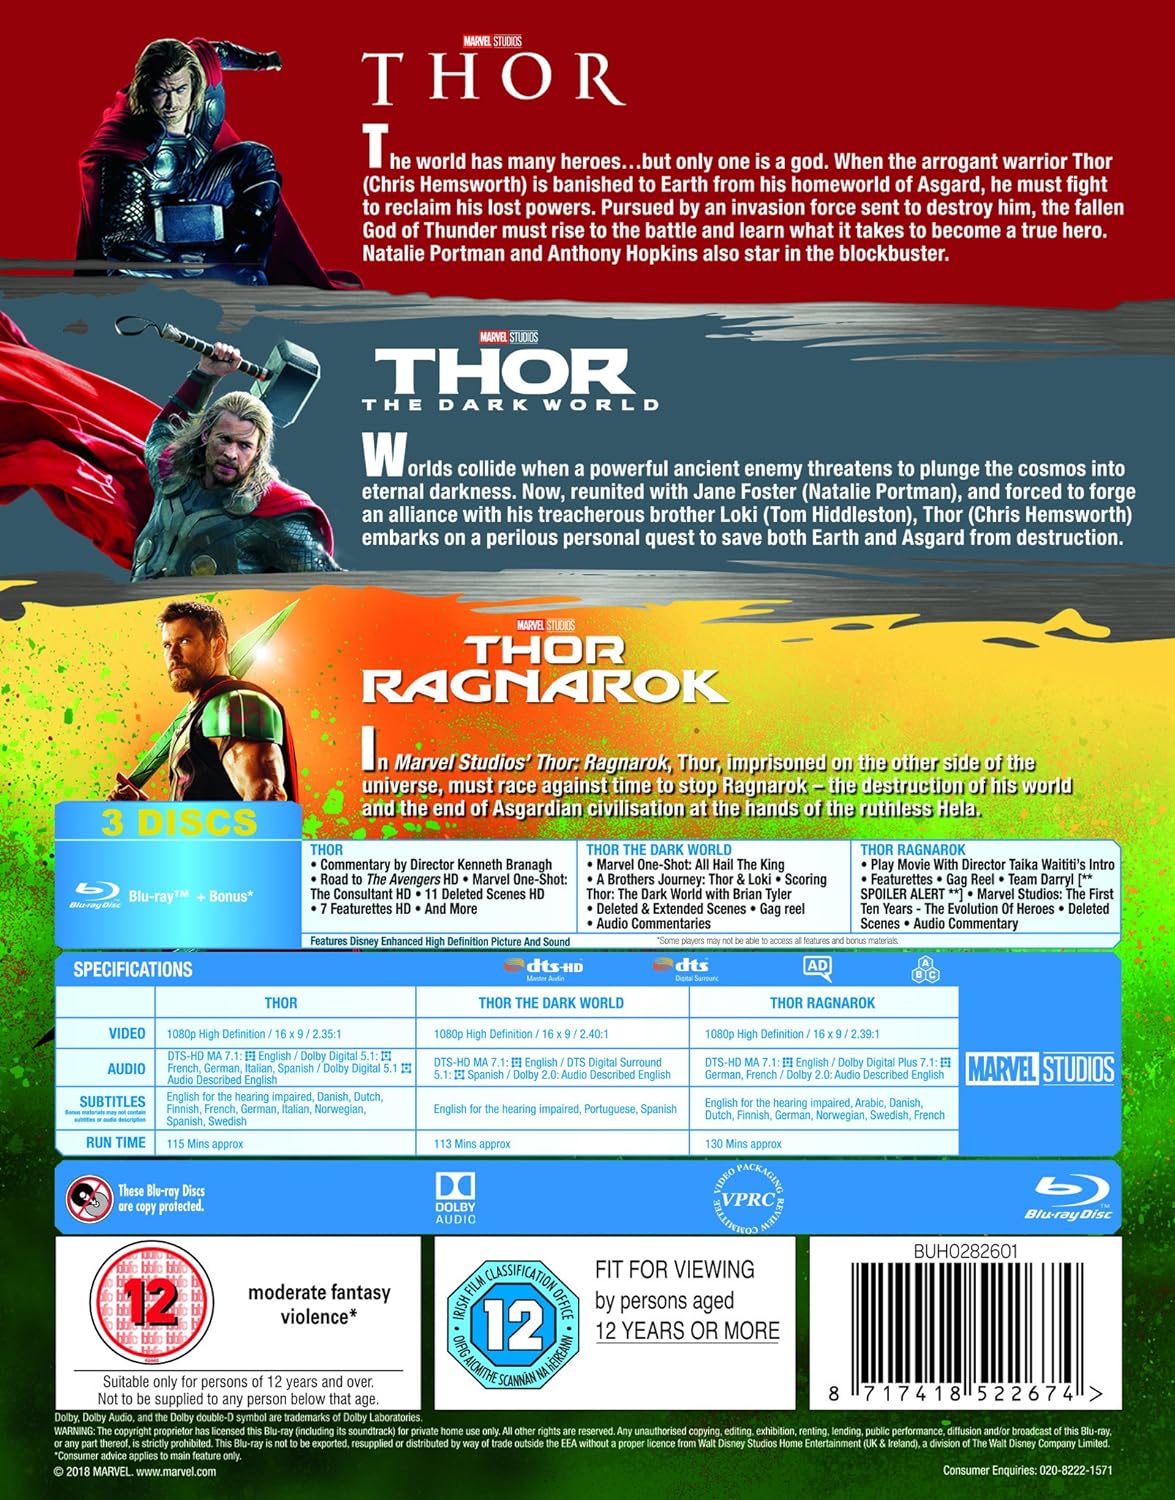 Thor Trilogy